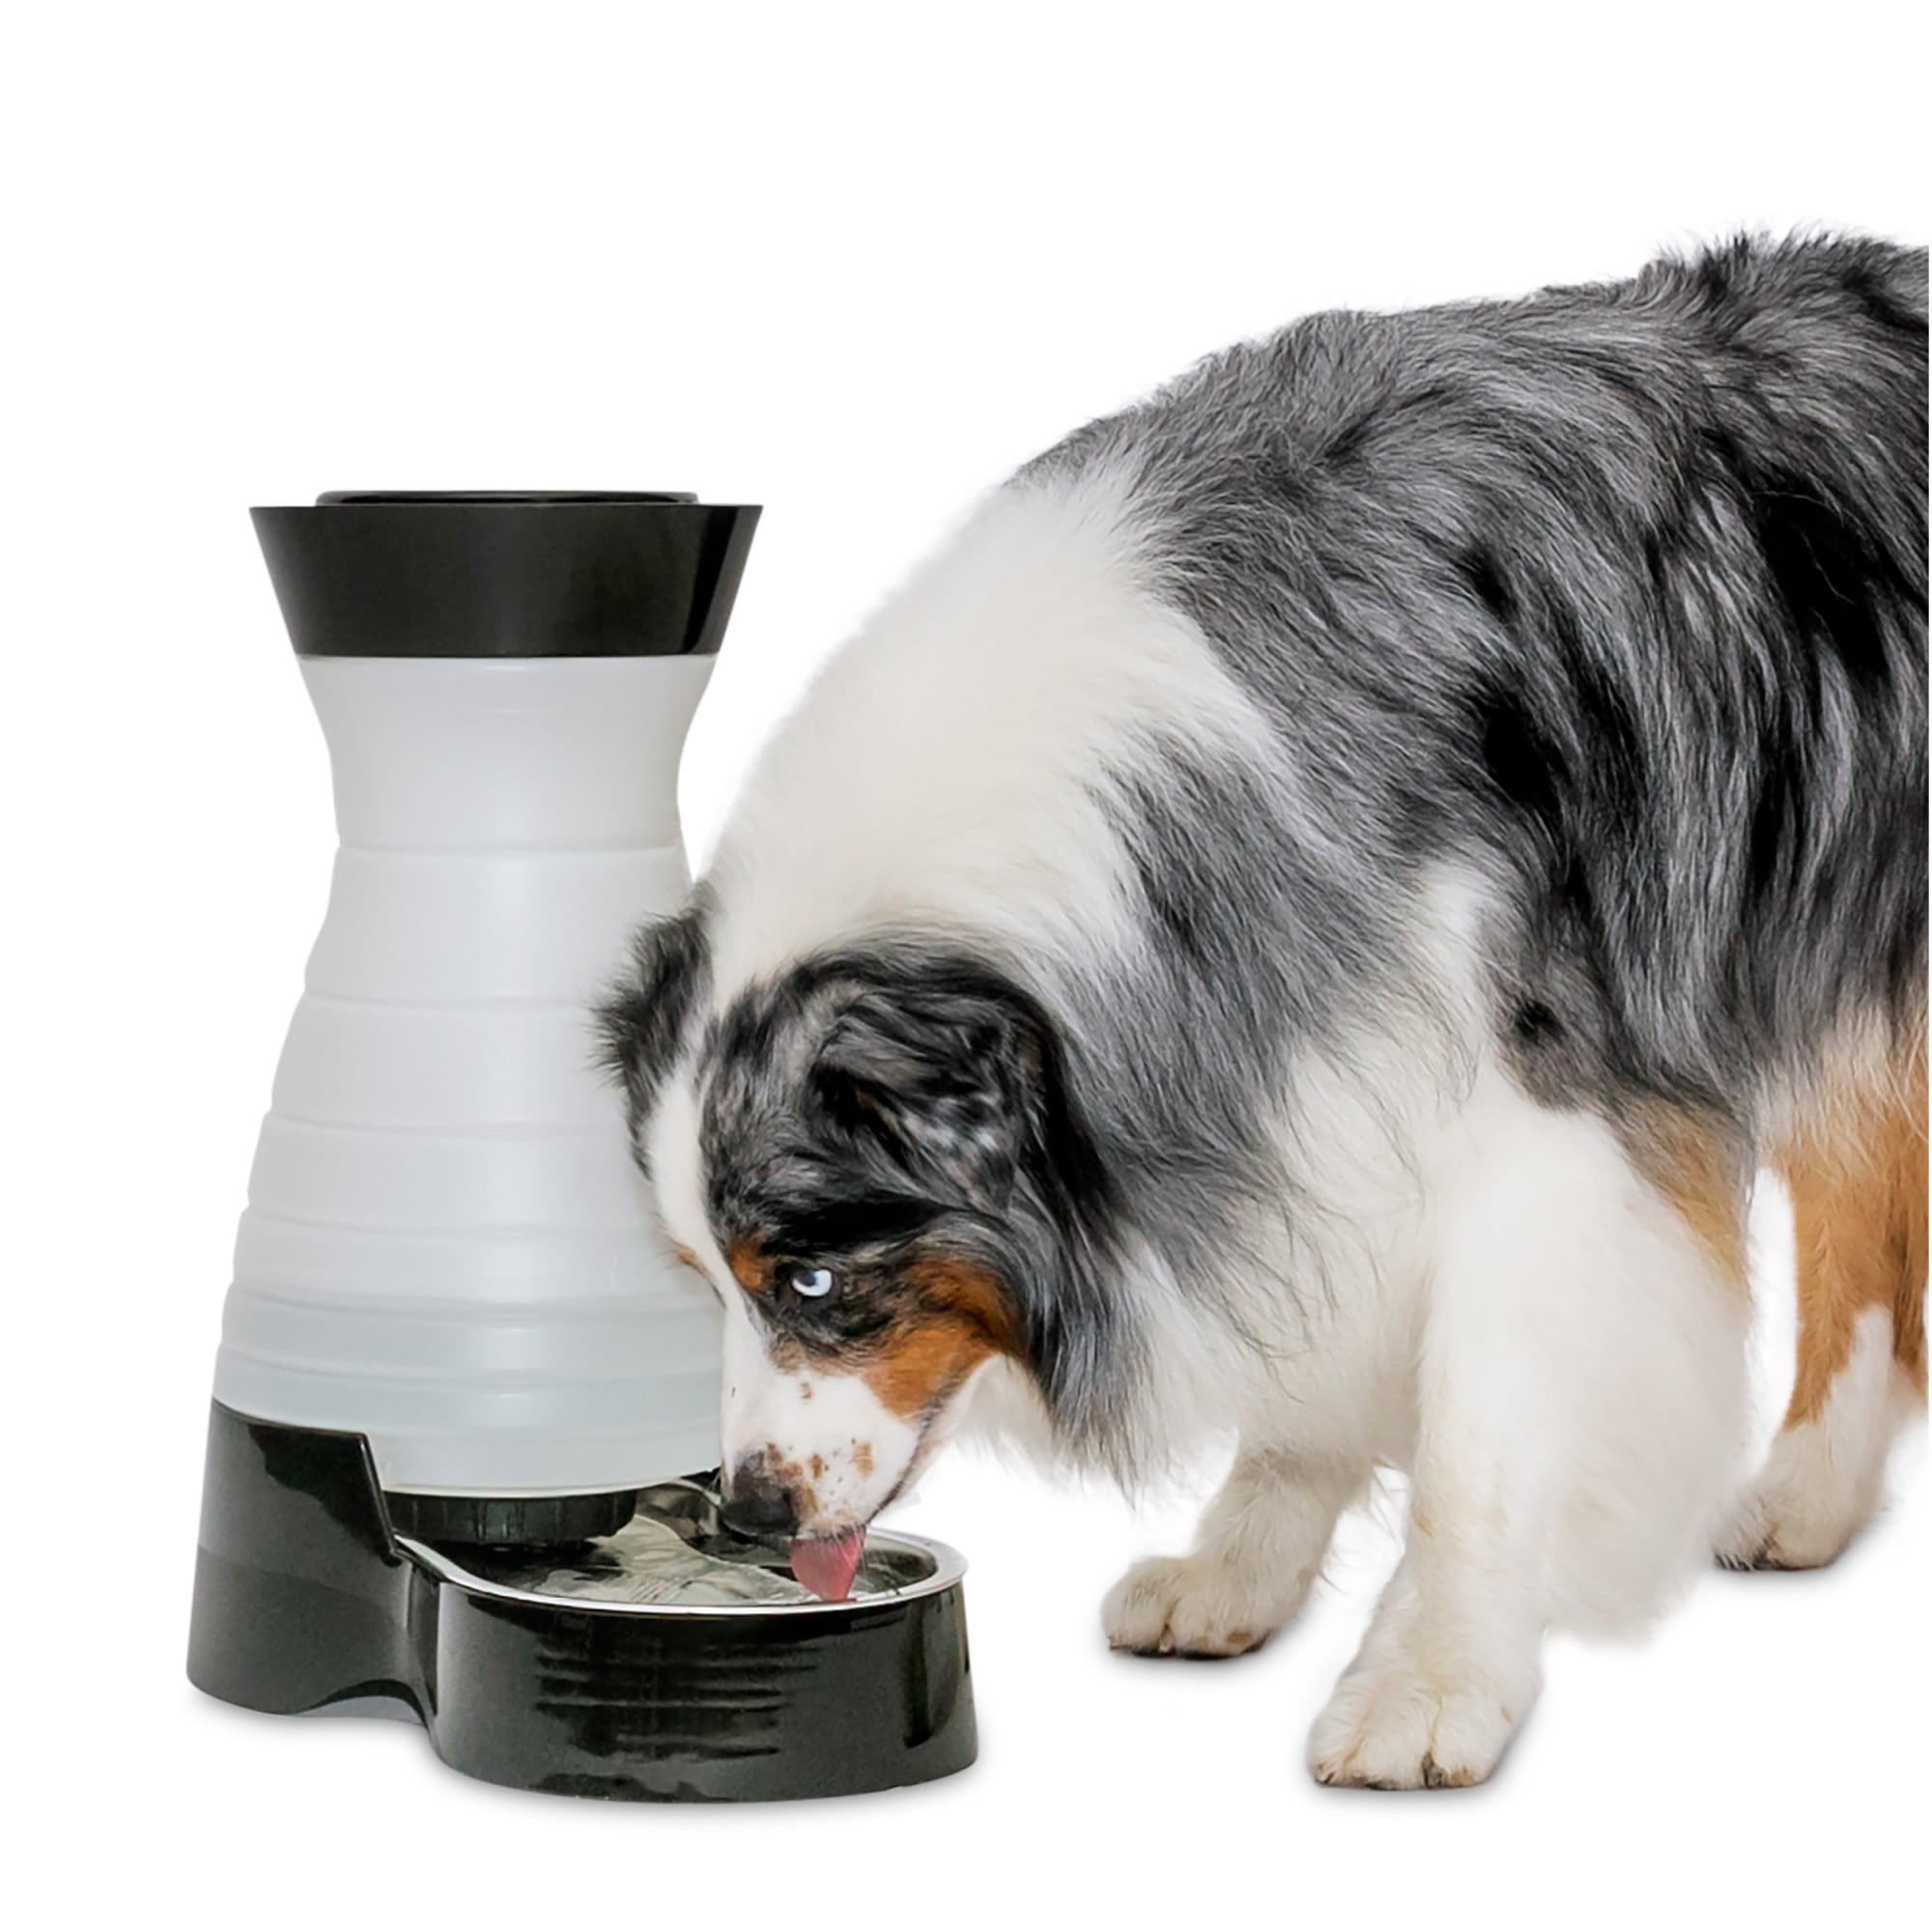  Dog Water Fountain,Dog Water Bowl Dispenser 2 Gallon